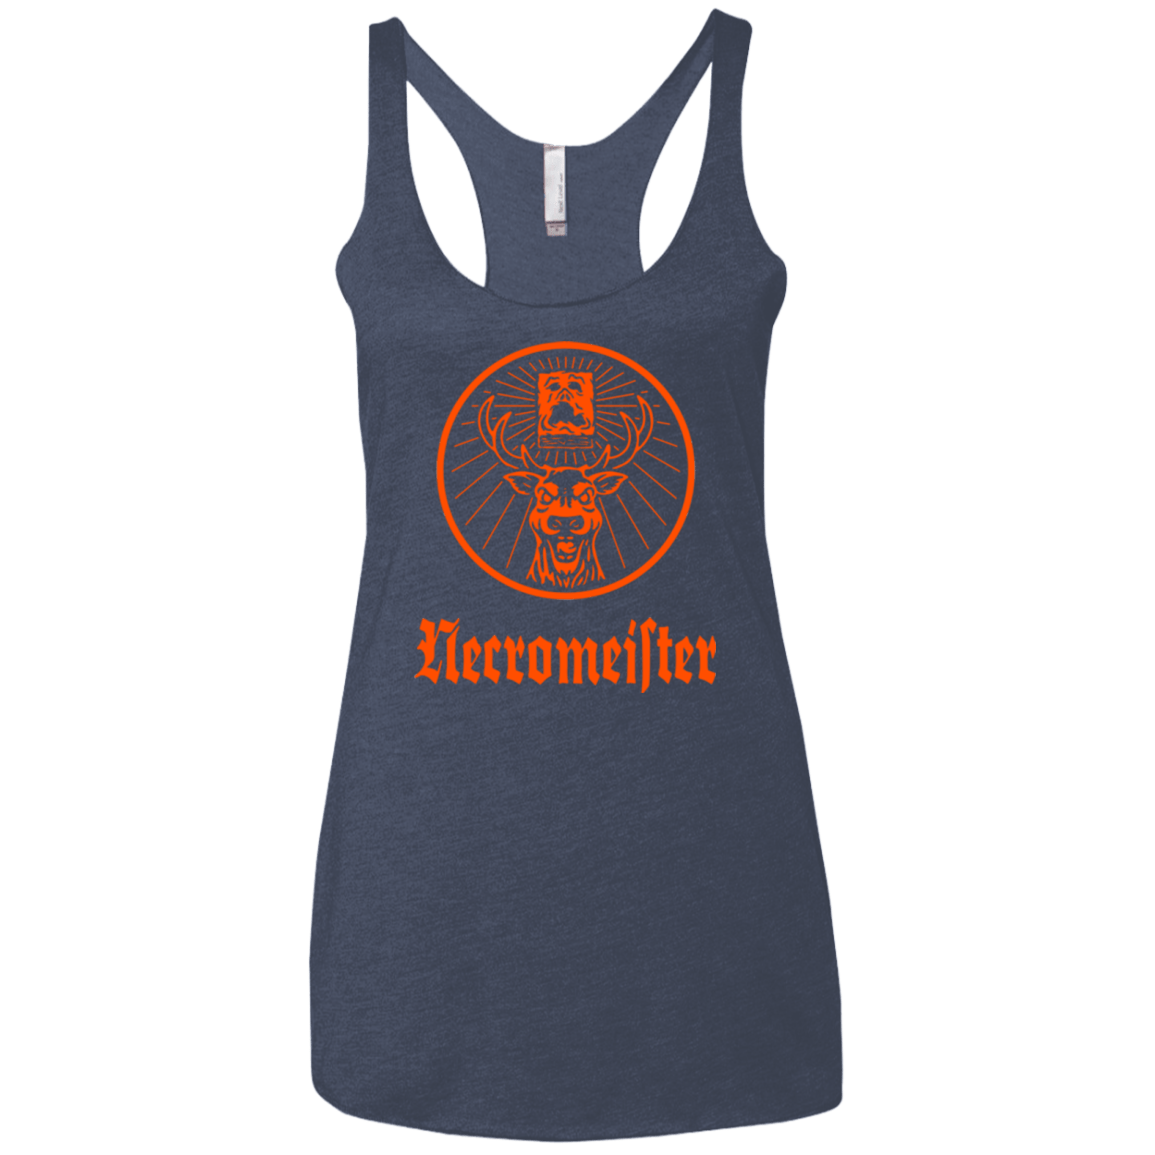 T-Shirts Vintage Navy / X-Small NECROMEISTER Women's Triblend Racerback Tank